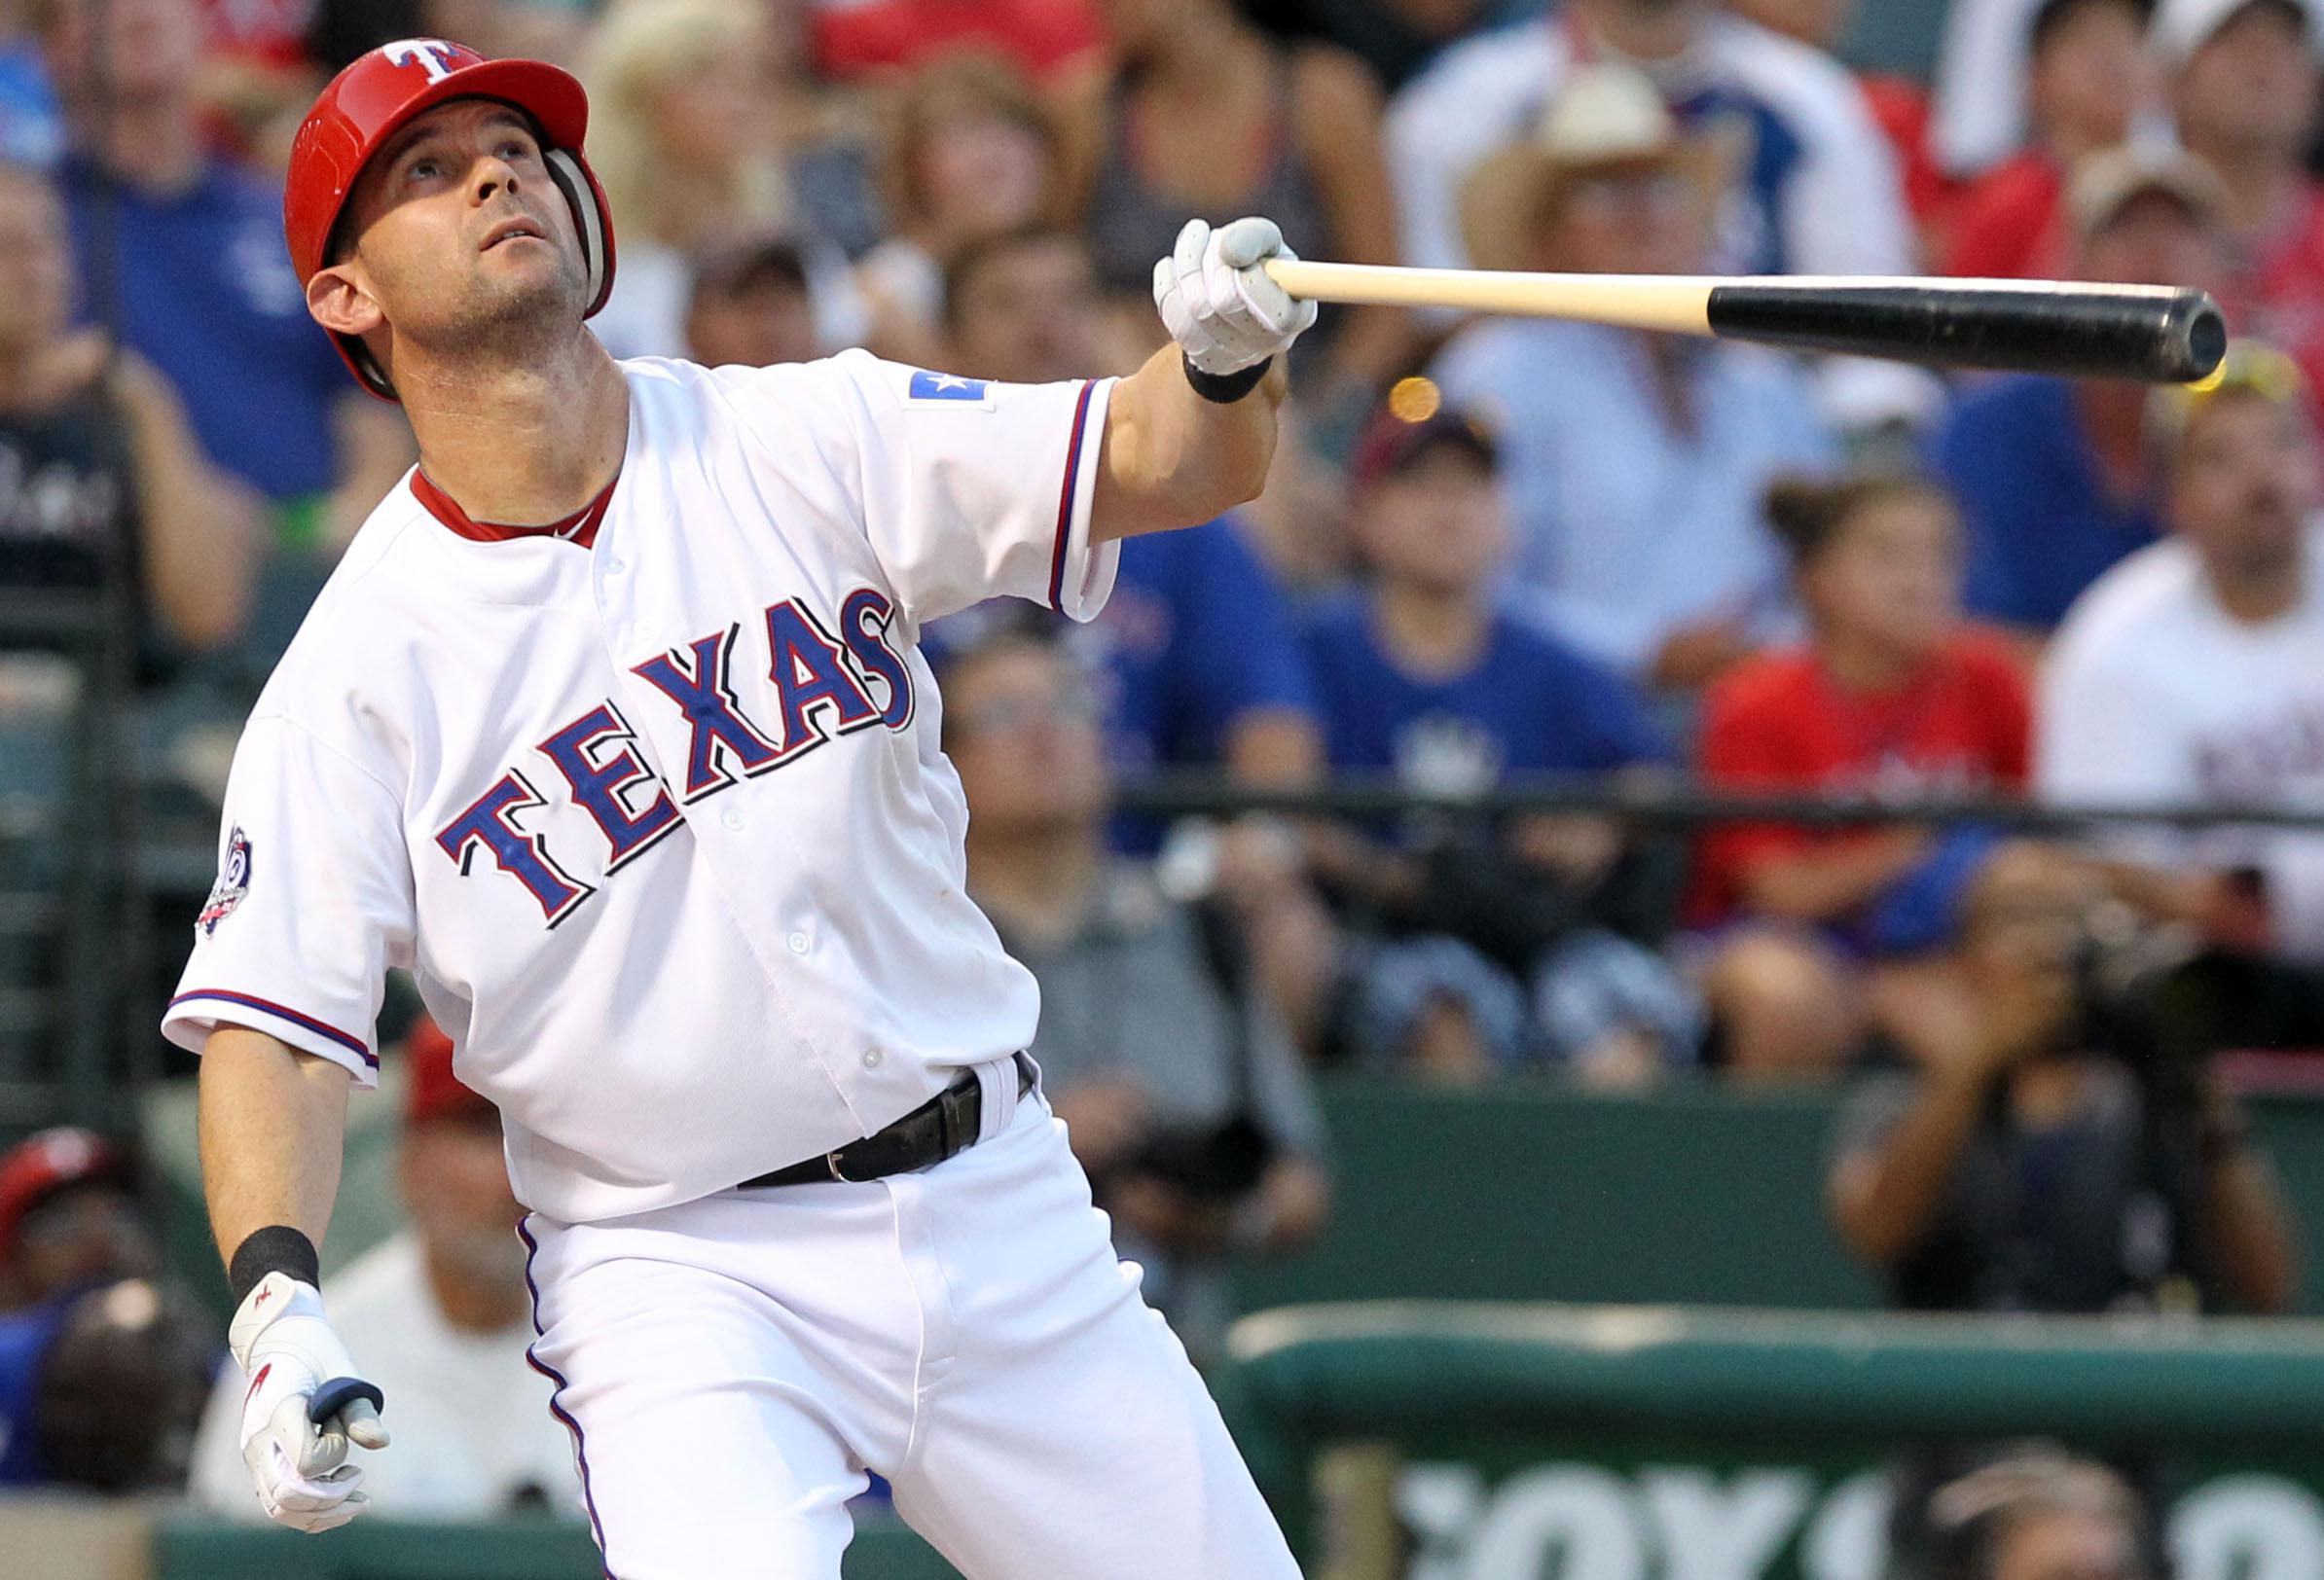 Rangers de Texas retirarán uniforme de Michael Young el 31 de agosto